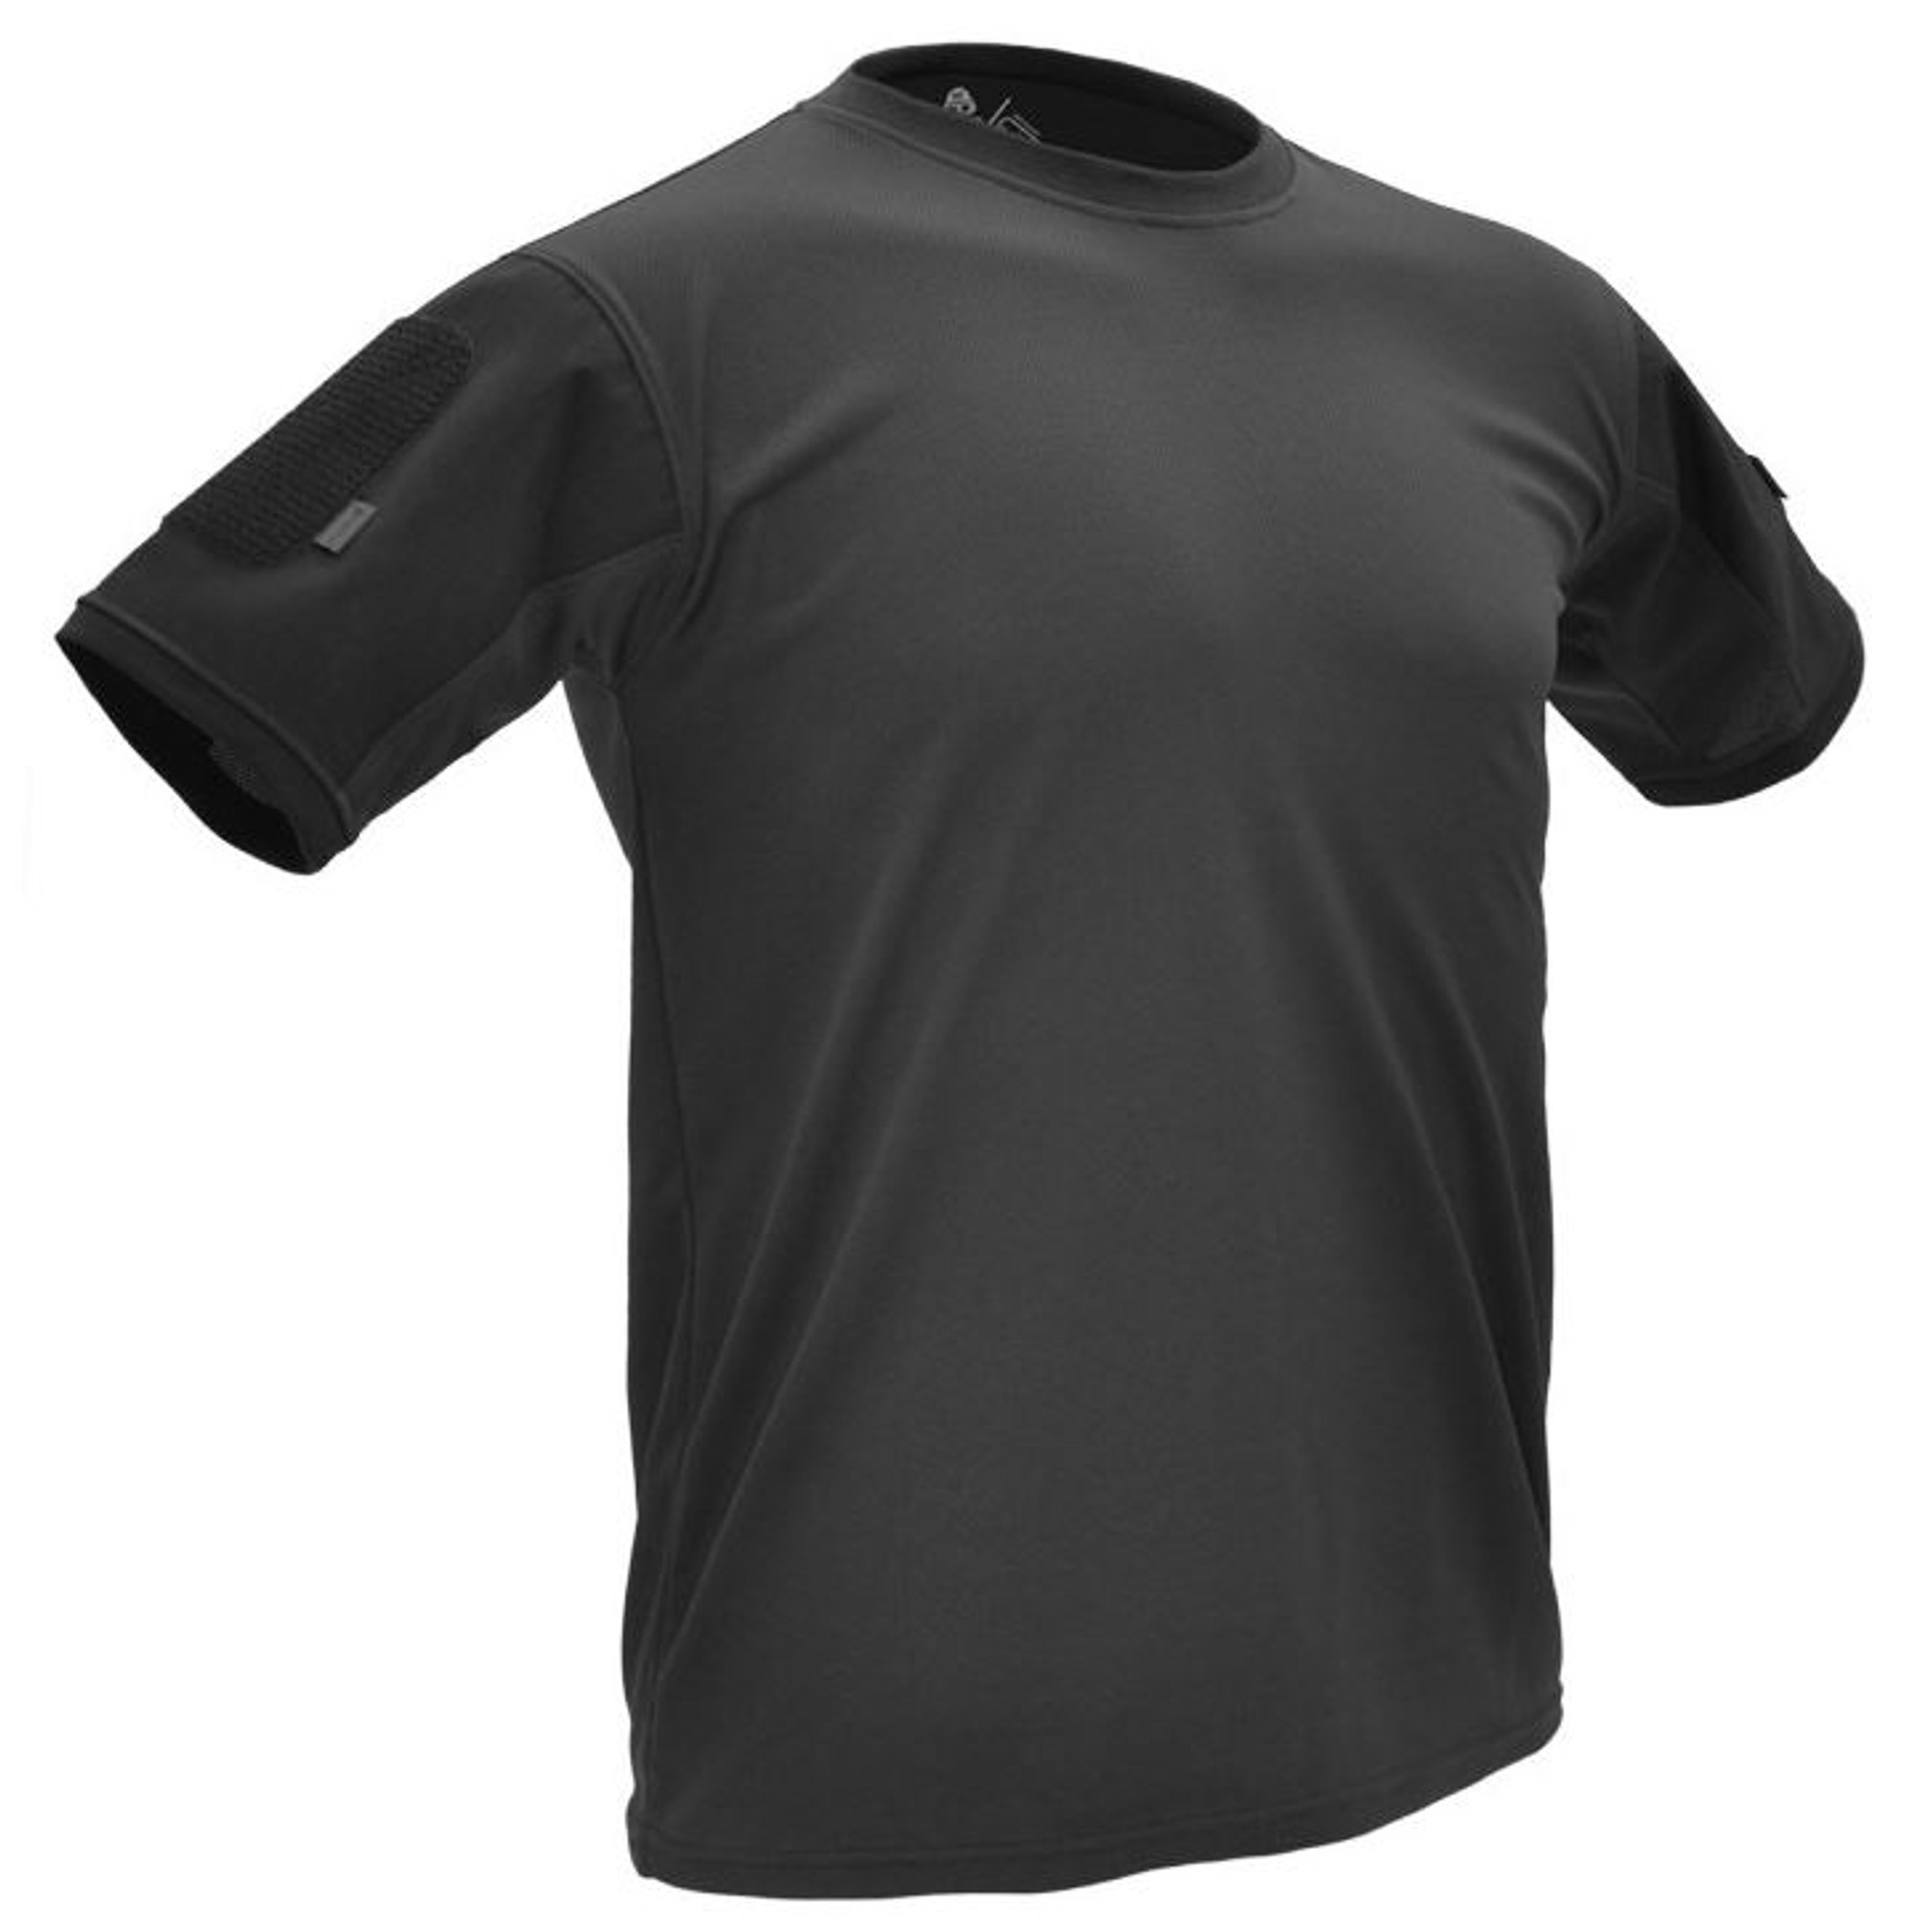 Hazard 4 Big Softie Patch T-Shirt - Black